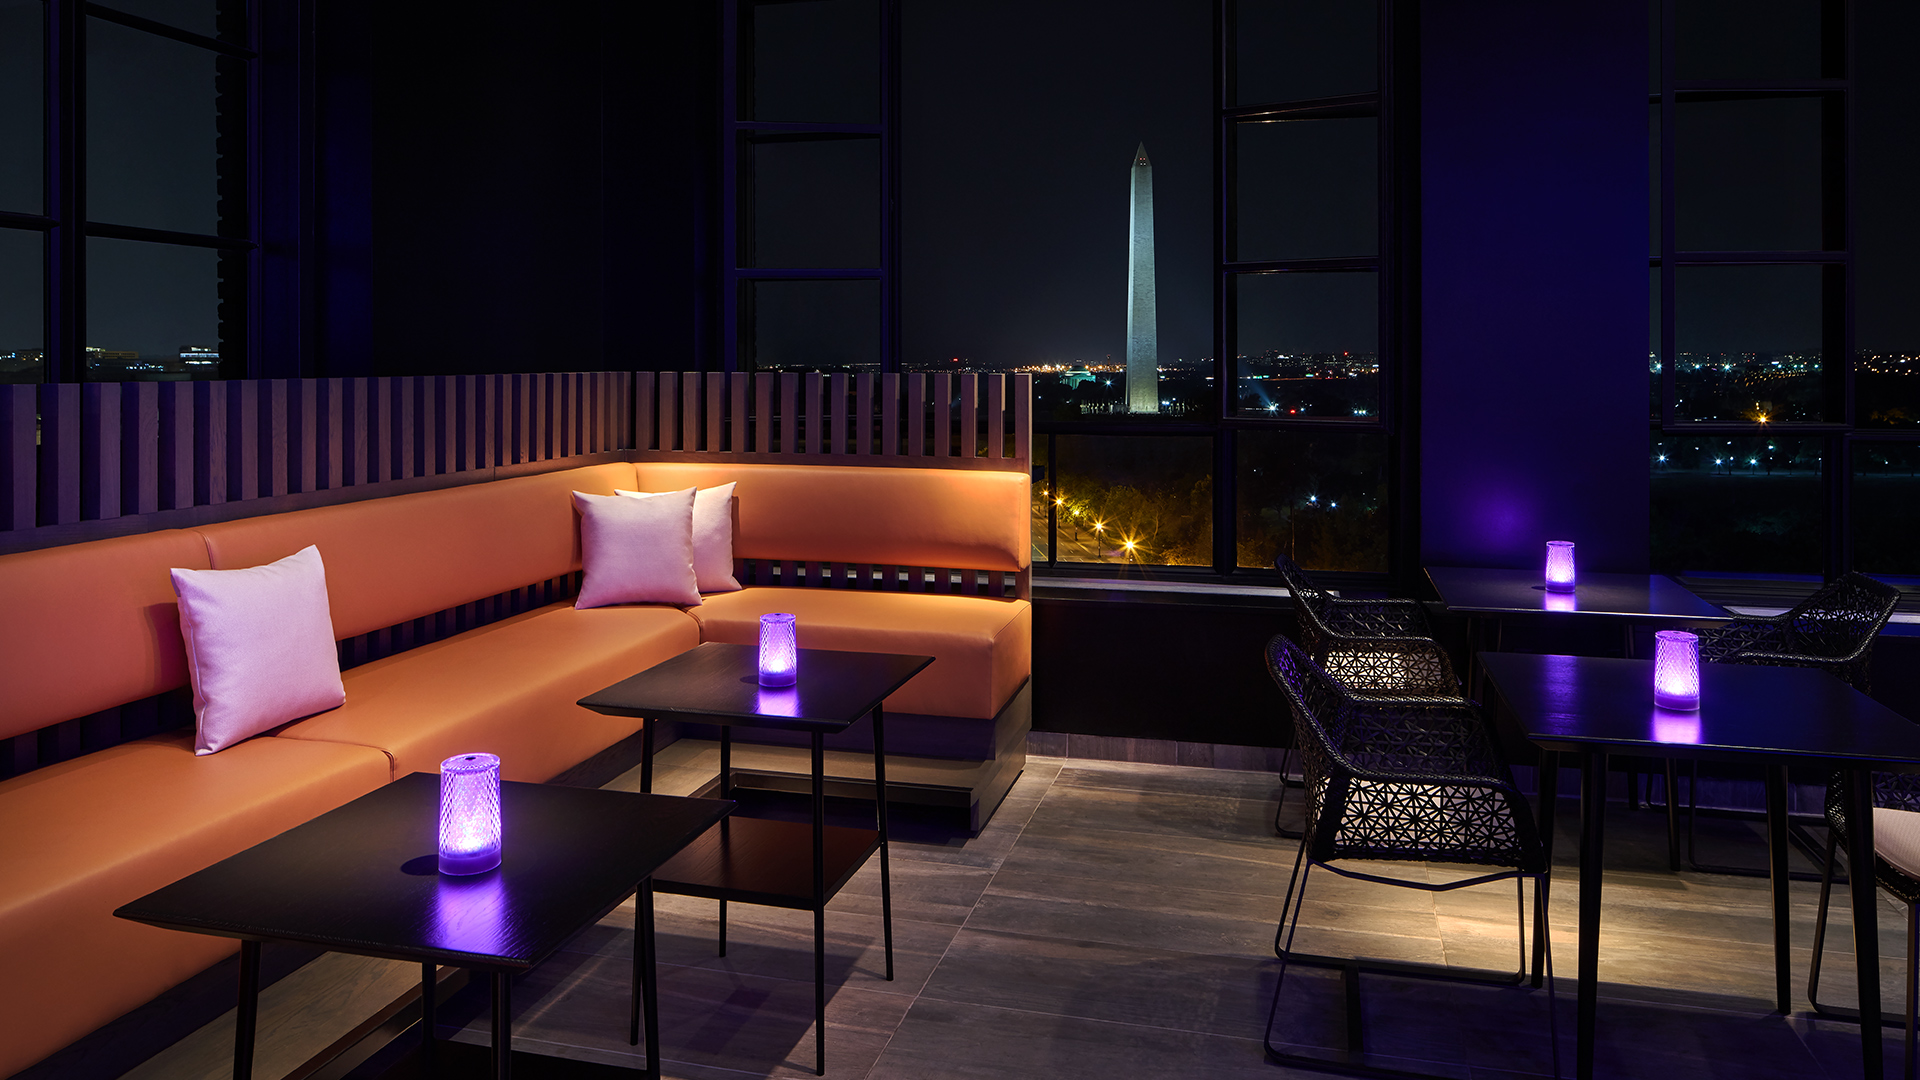 The Hotel Washington - Modern Luxury Hotel